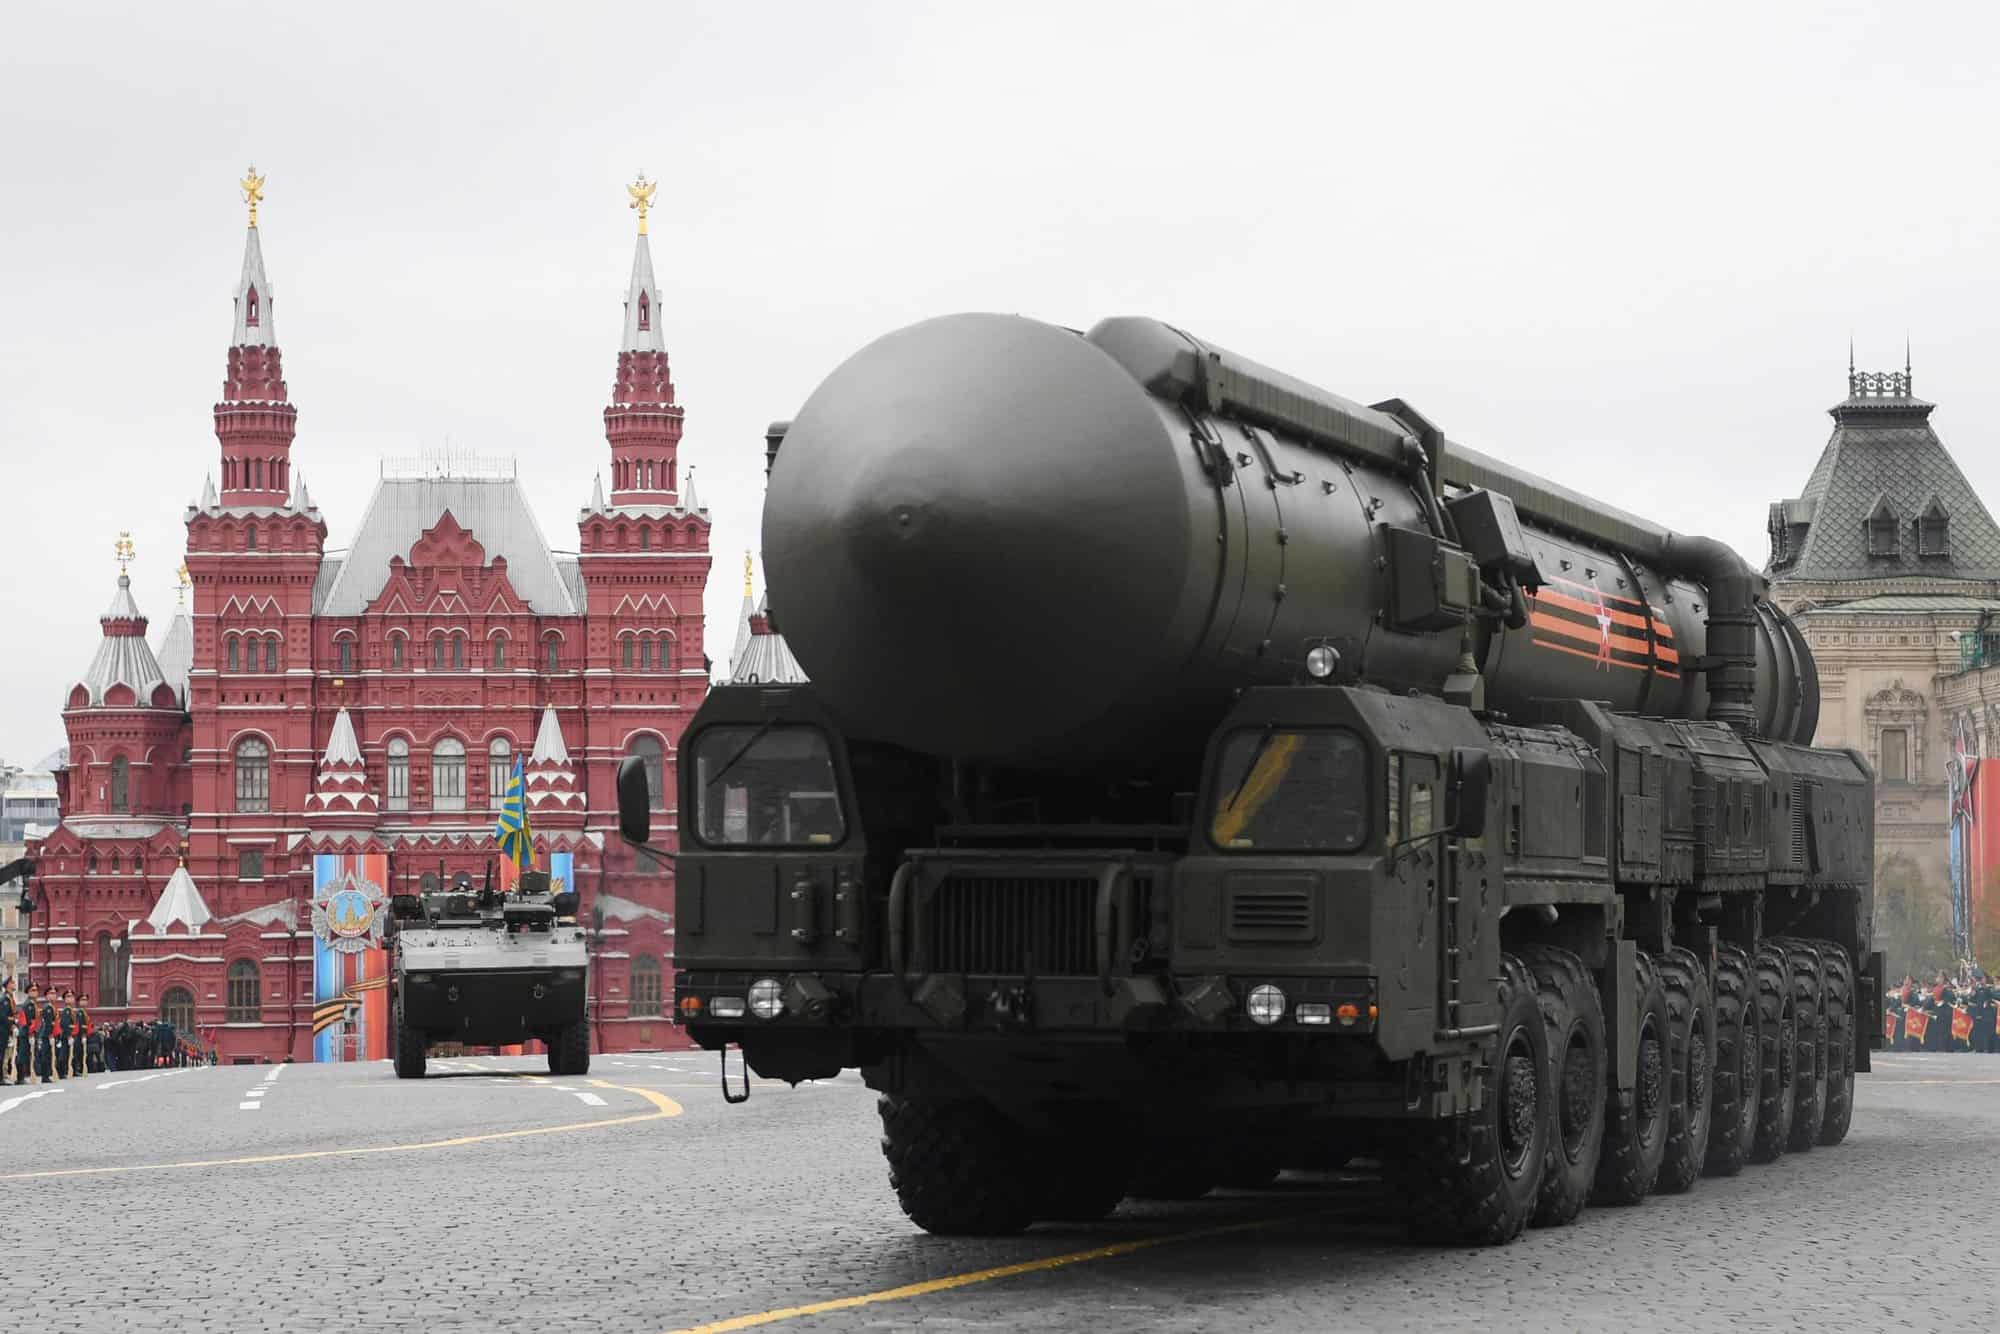 Satanás II': entenda o poder do novo míssil nuclear de Vladimir Putin - Olhar Digital